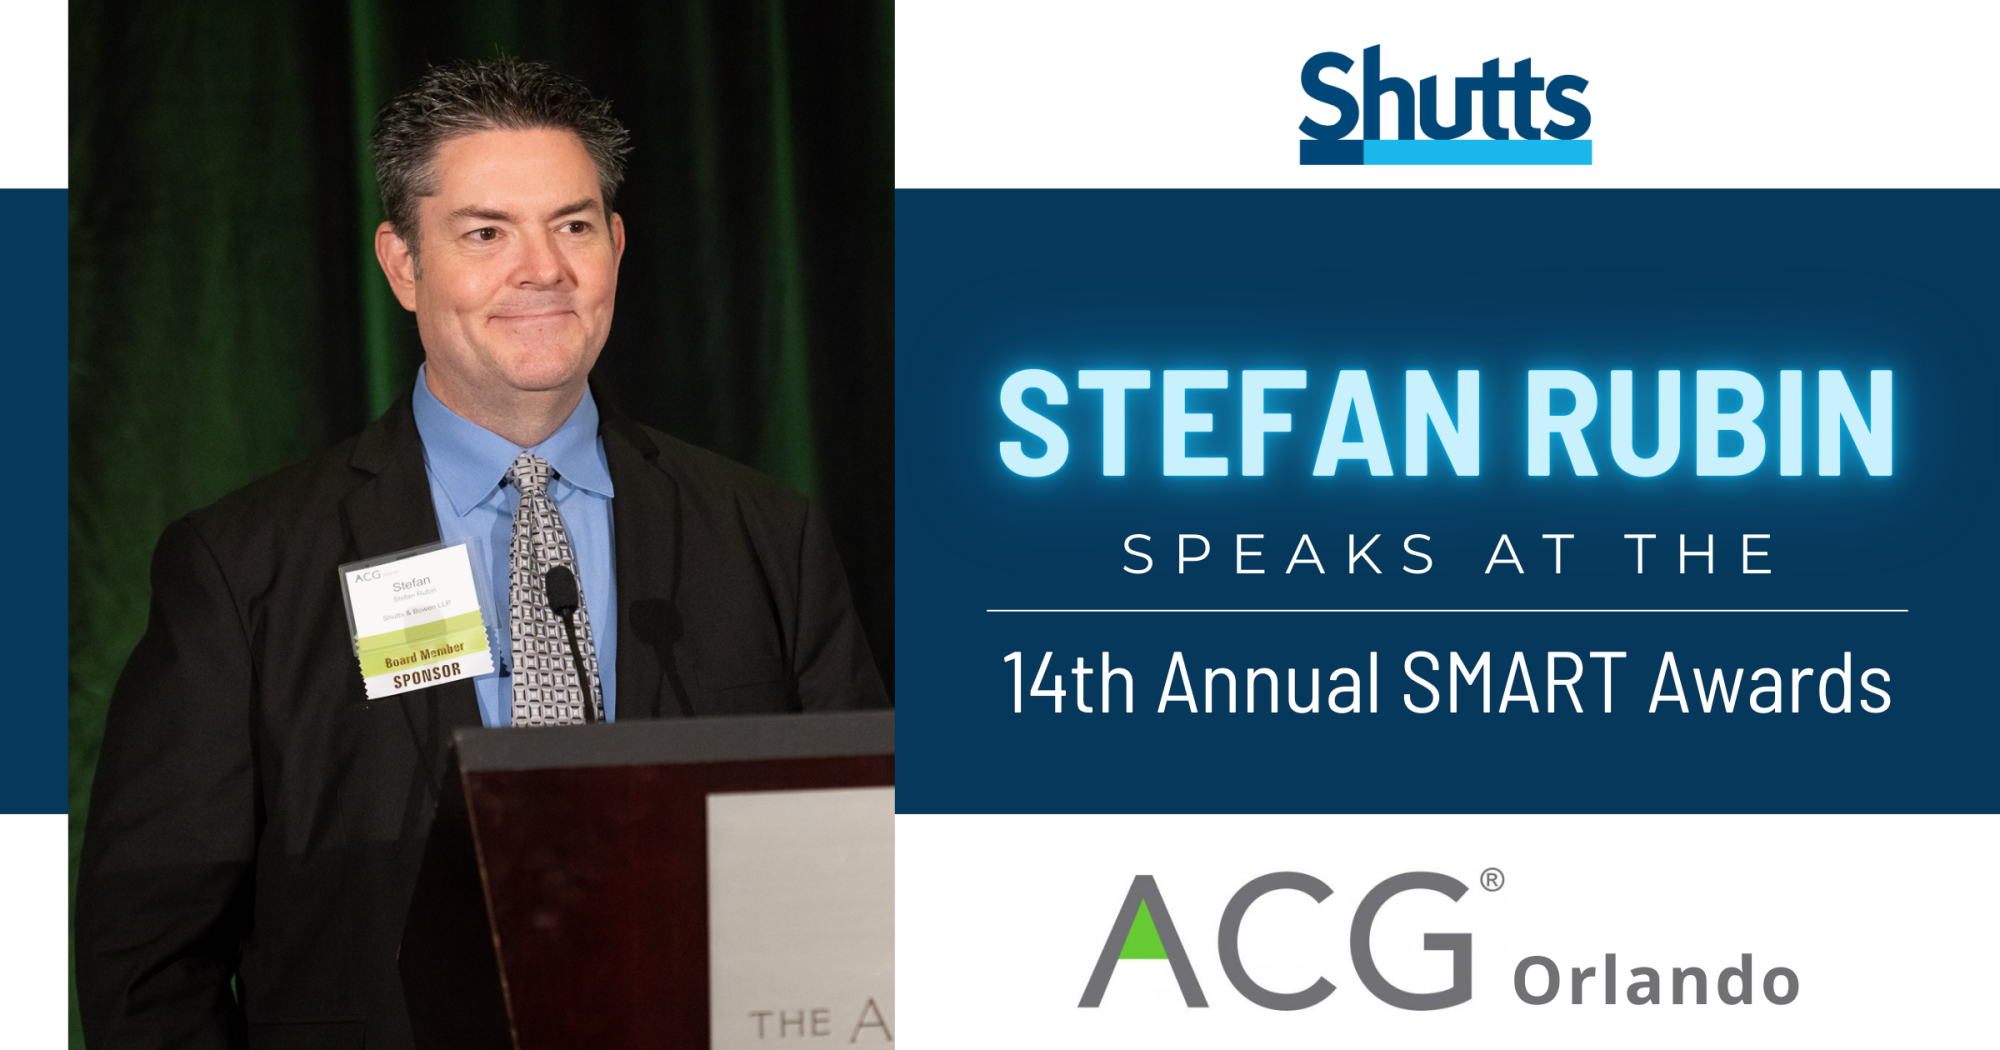 Stefan Rubin Speaks at the 14th Annual SMART Awards